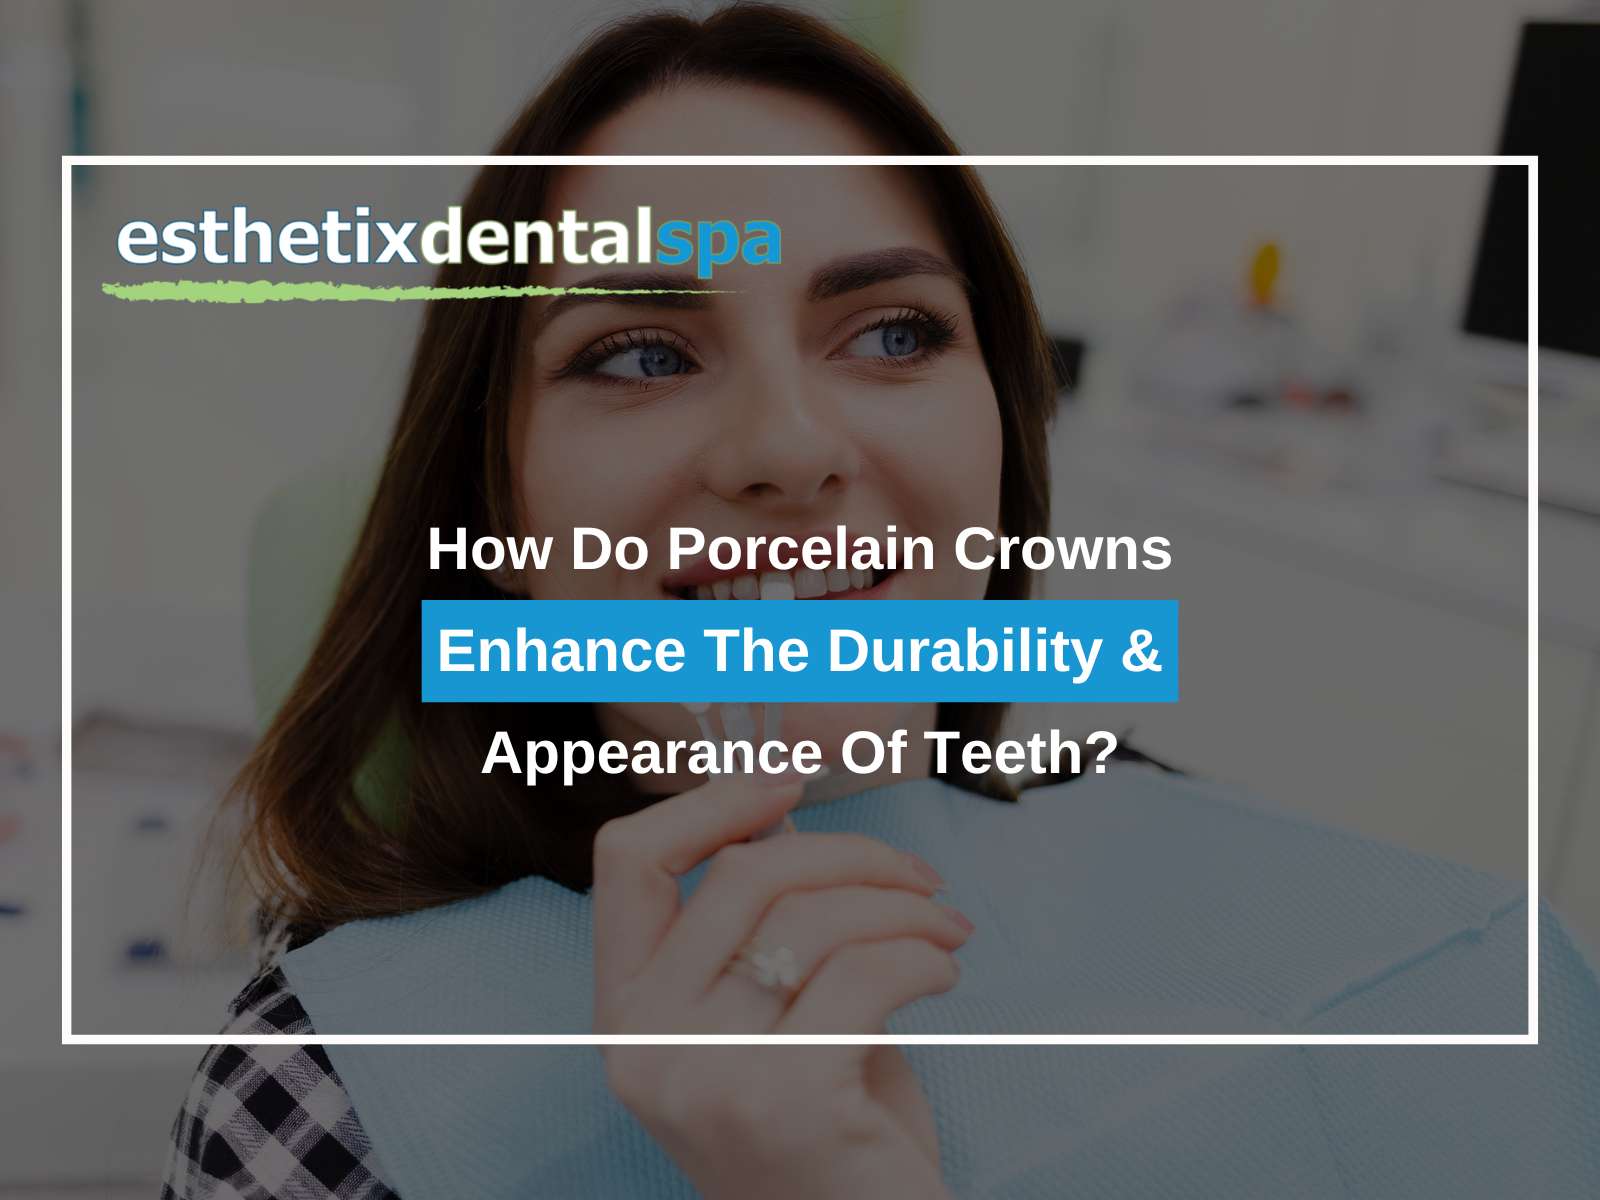 How Do Porcelain Crowns Enhance The Durability and Appearance Of Teeth?